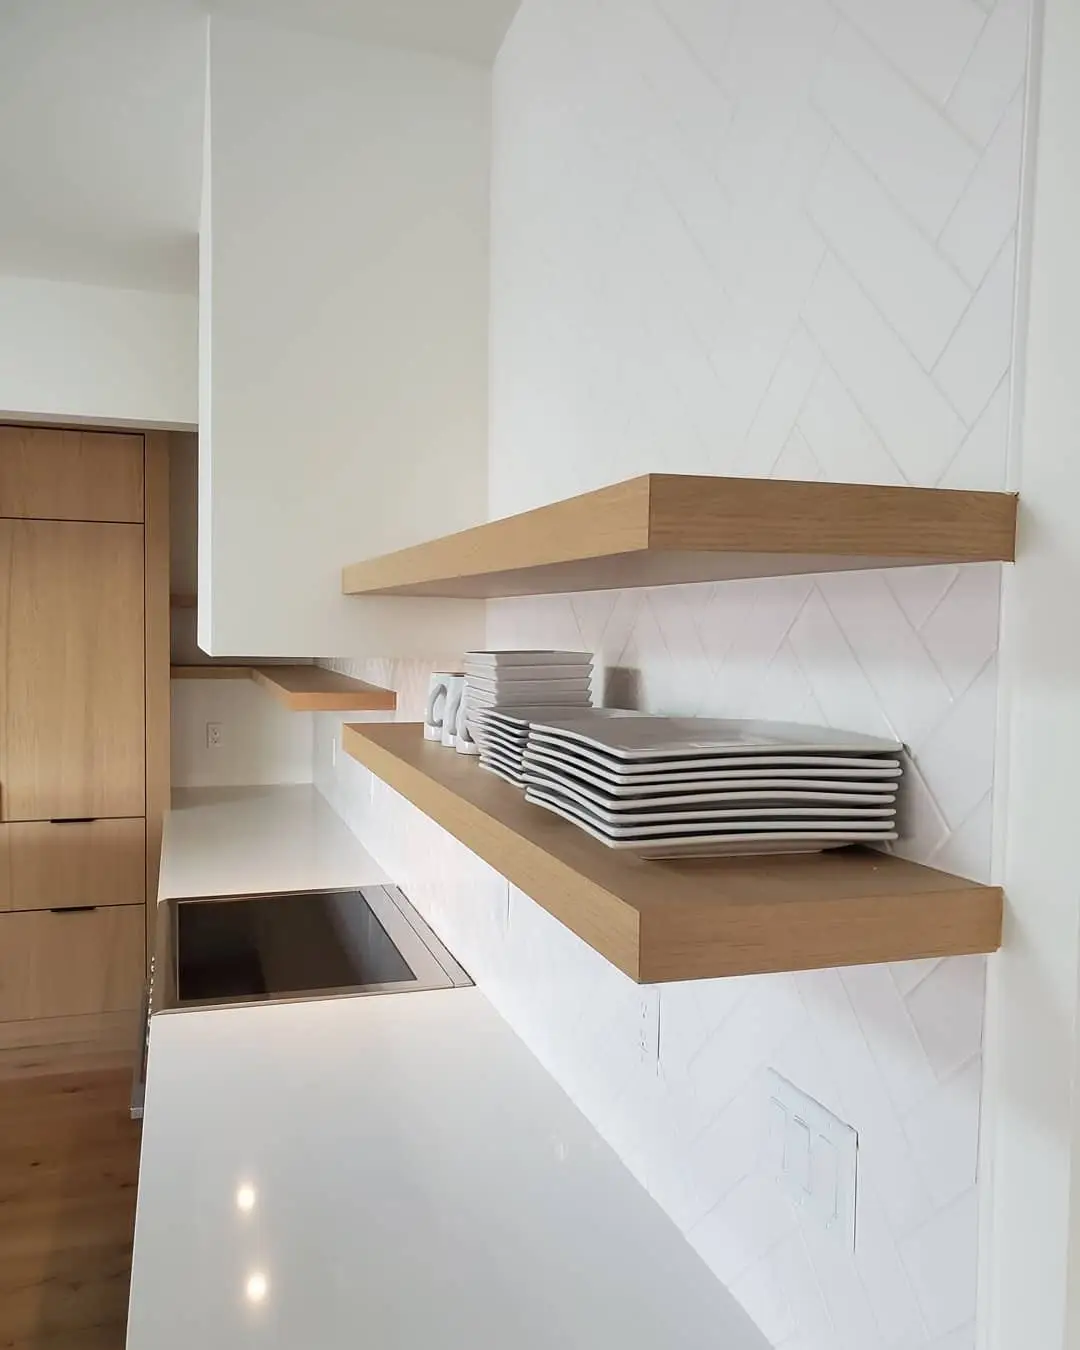 2021 Fashion customized wood grain cabinets kitchen modern kitchen cabinets Island kitchen cabinet design